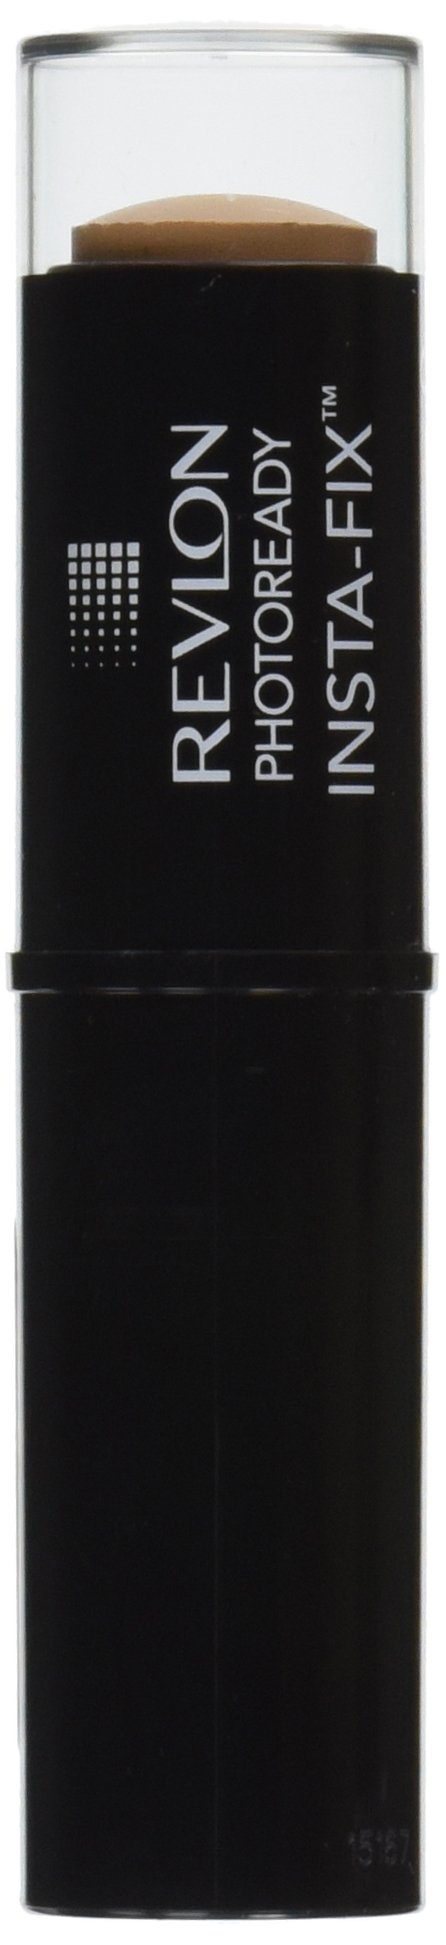 Revlon Photoready Insta-Fix Stick Makeup #150 Natural Beige 6,8g